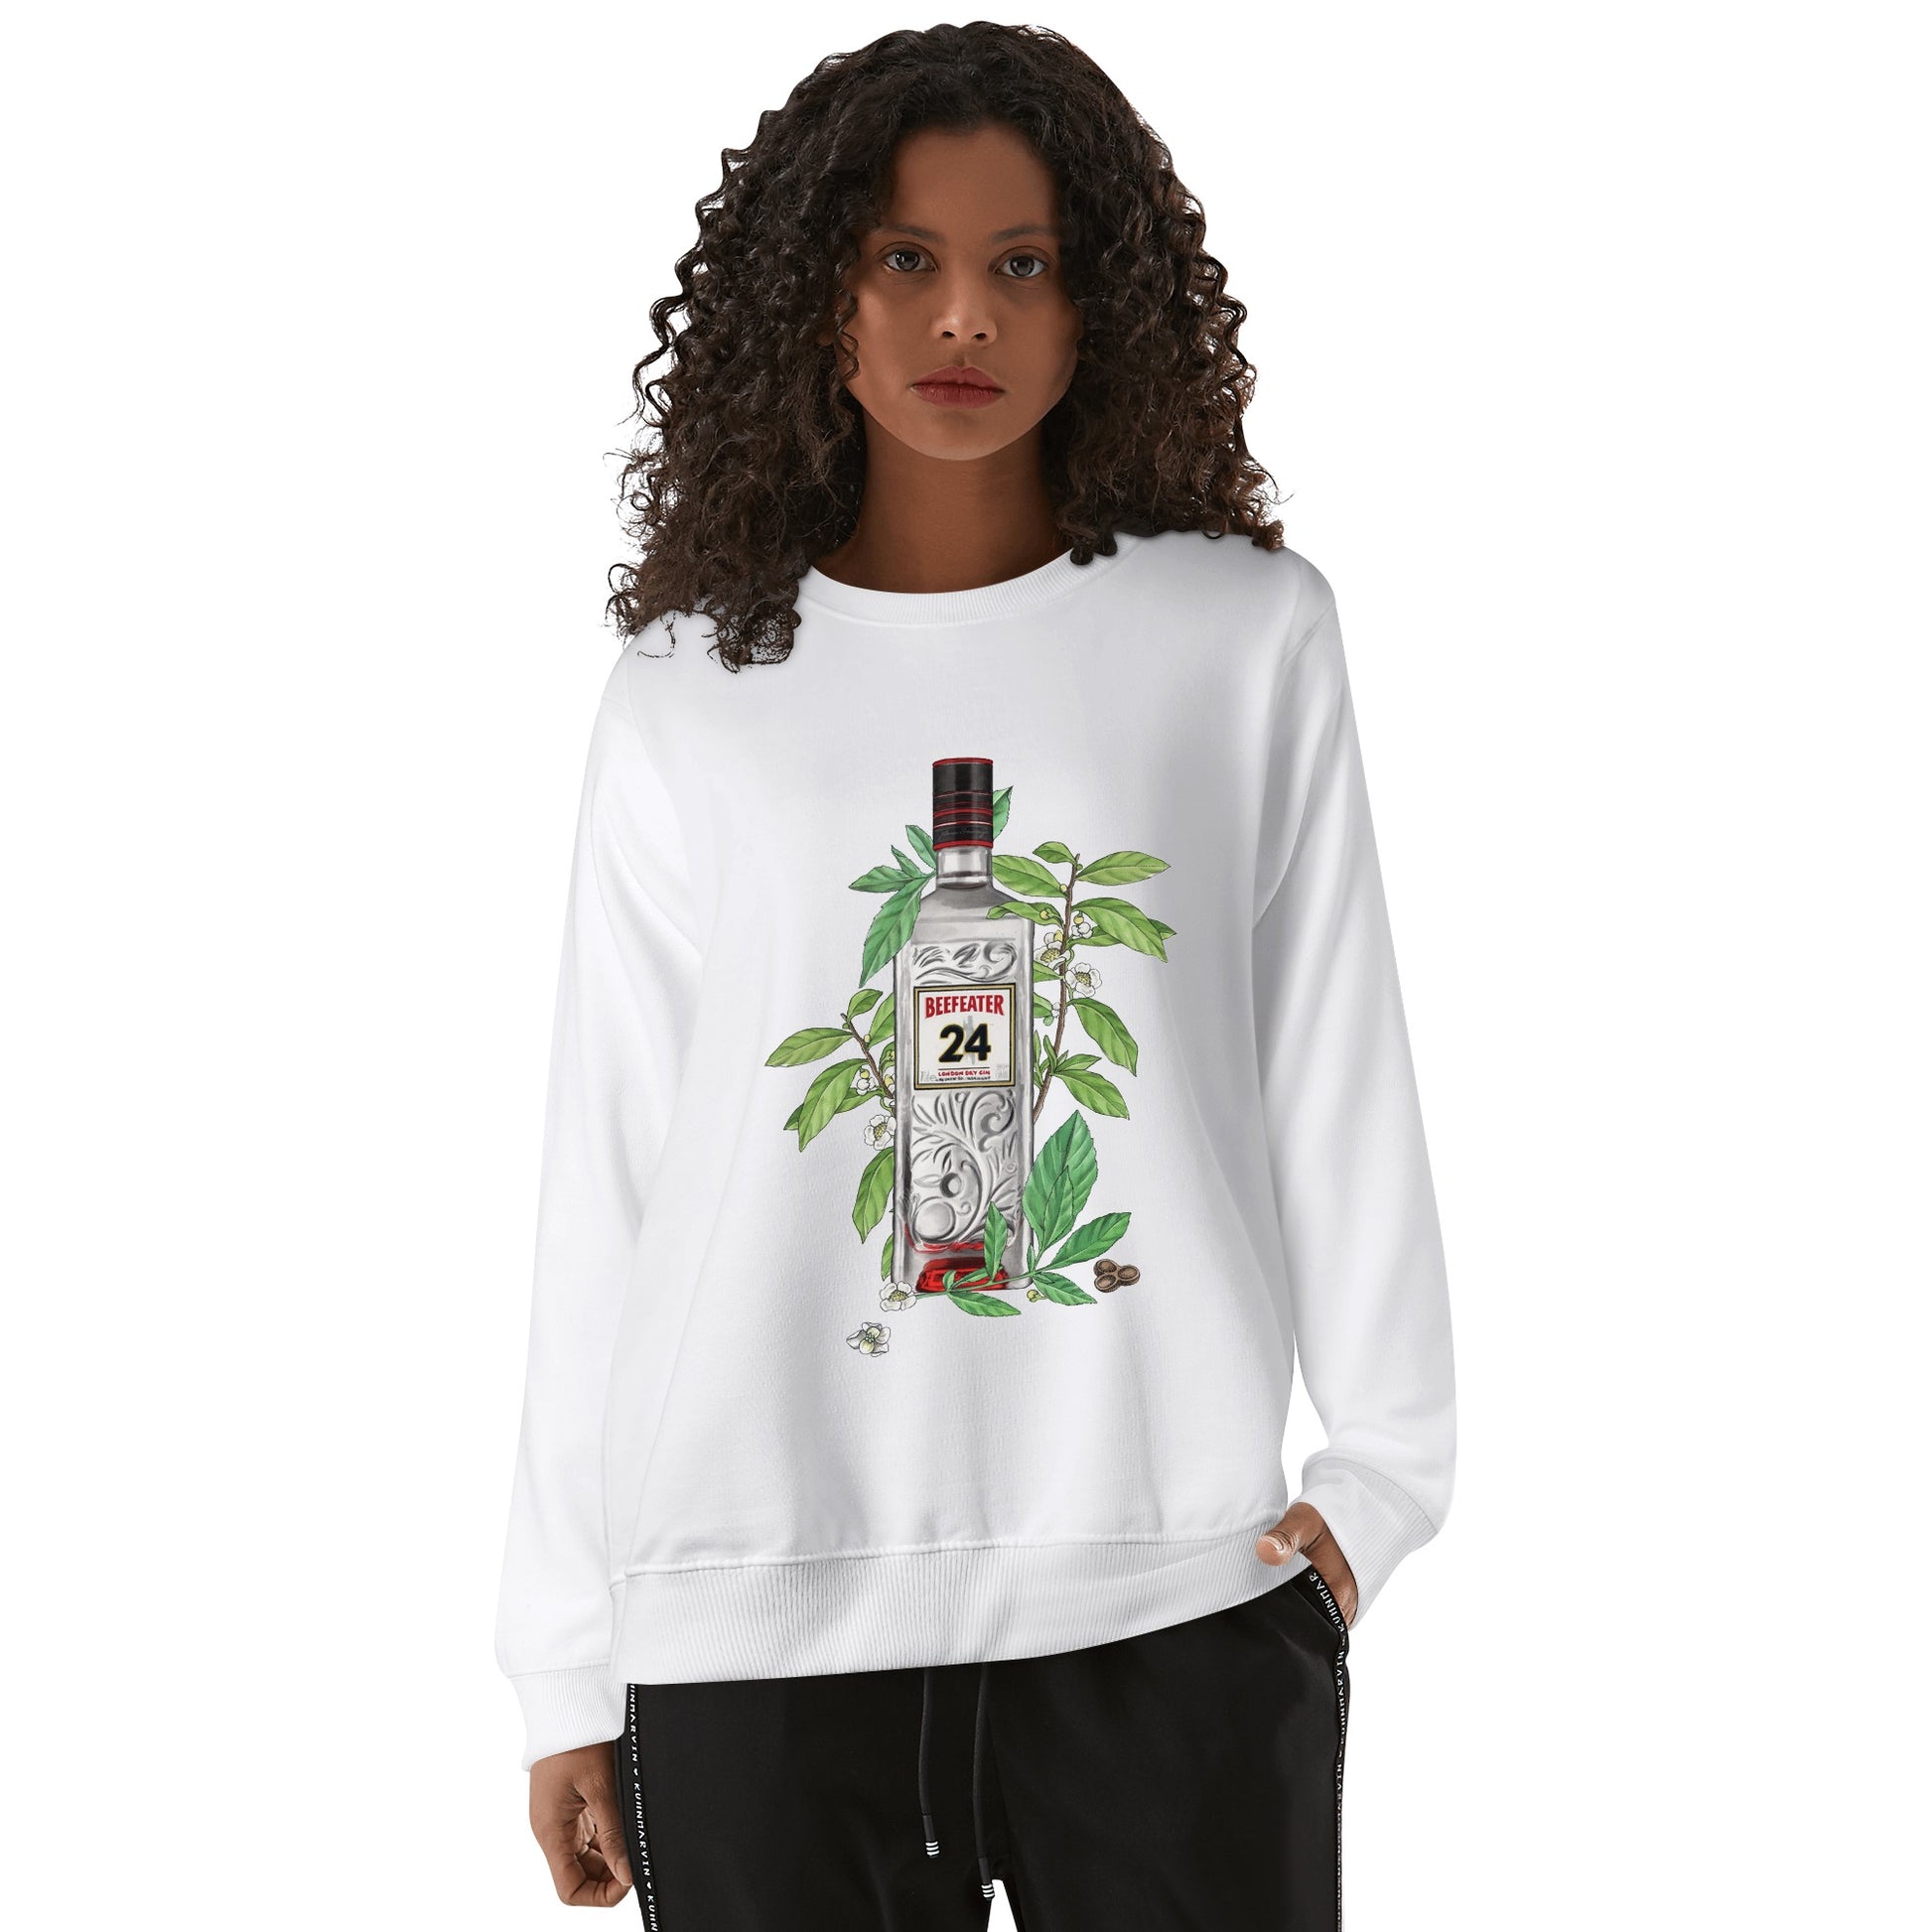 Sweatershirt Cotton gin beefeater floral art DrinkandArt